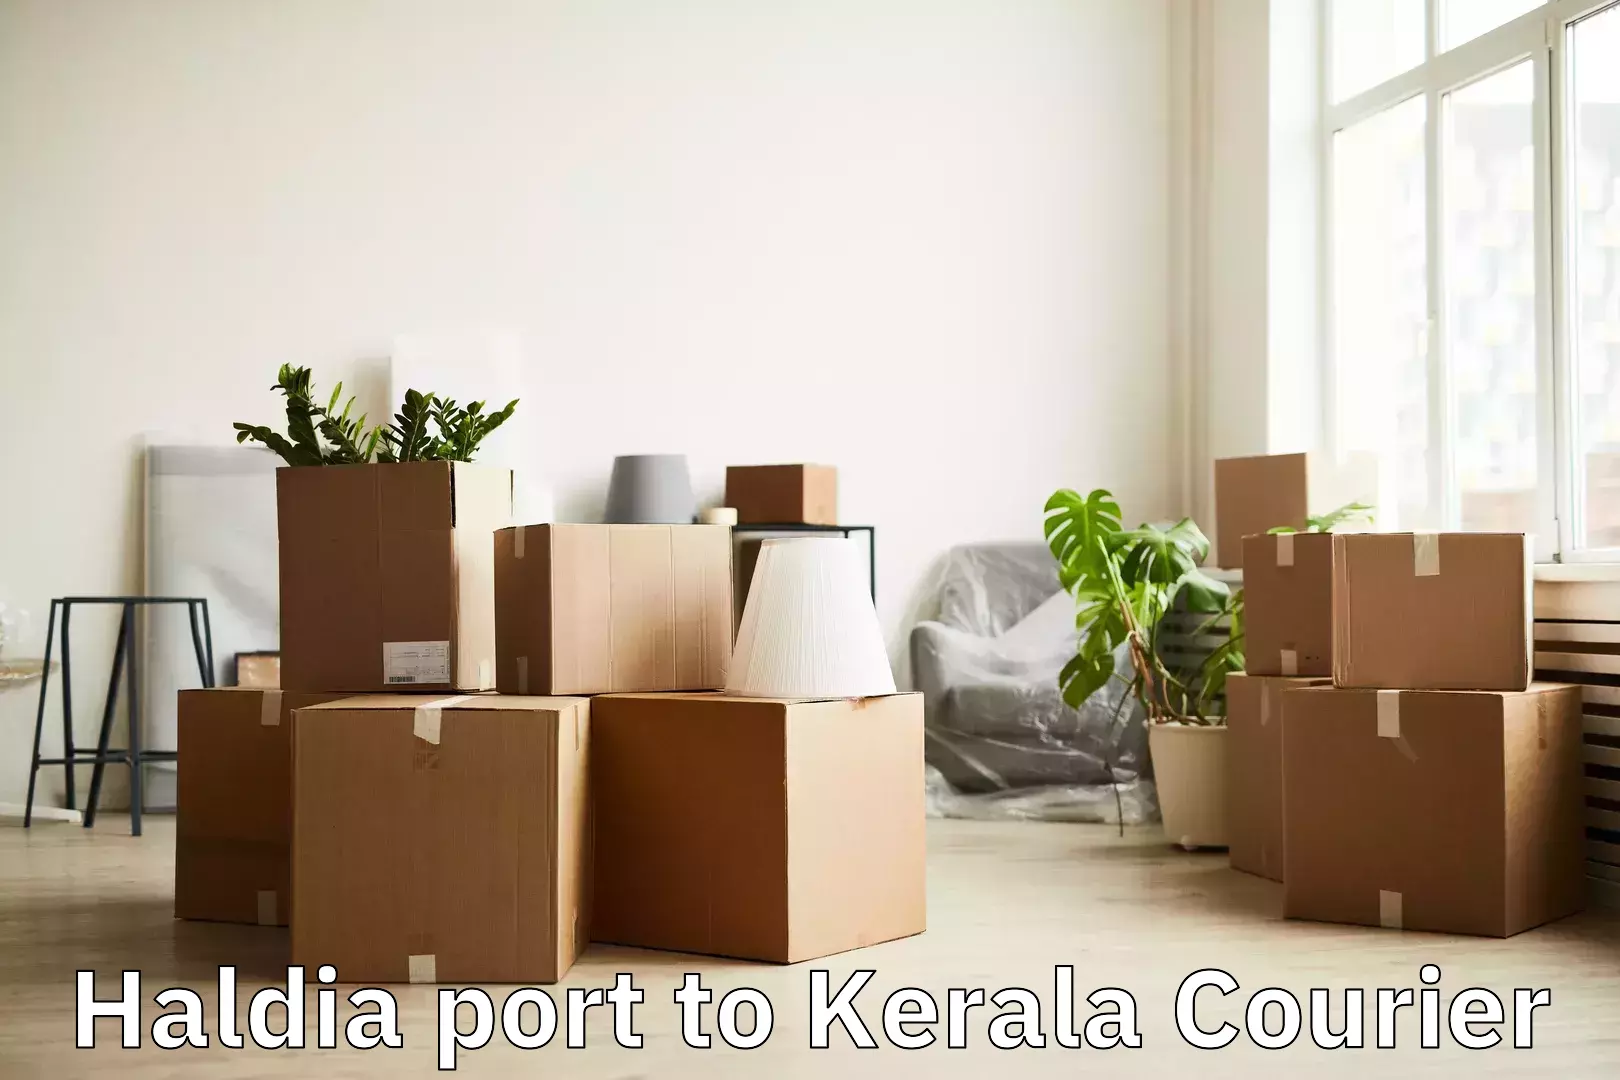 Urgent luggage shipment Haldia port to Kerala